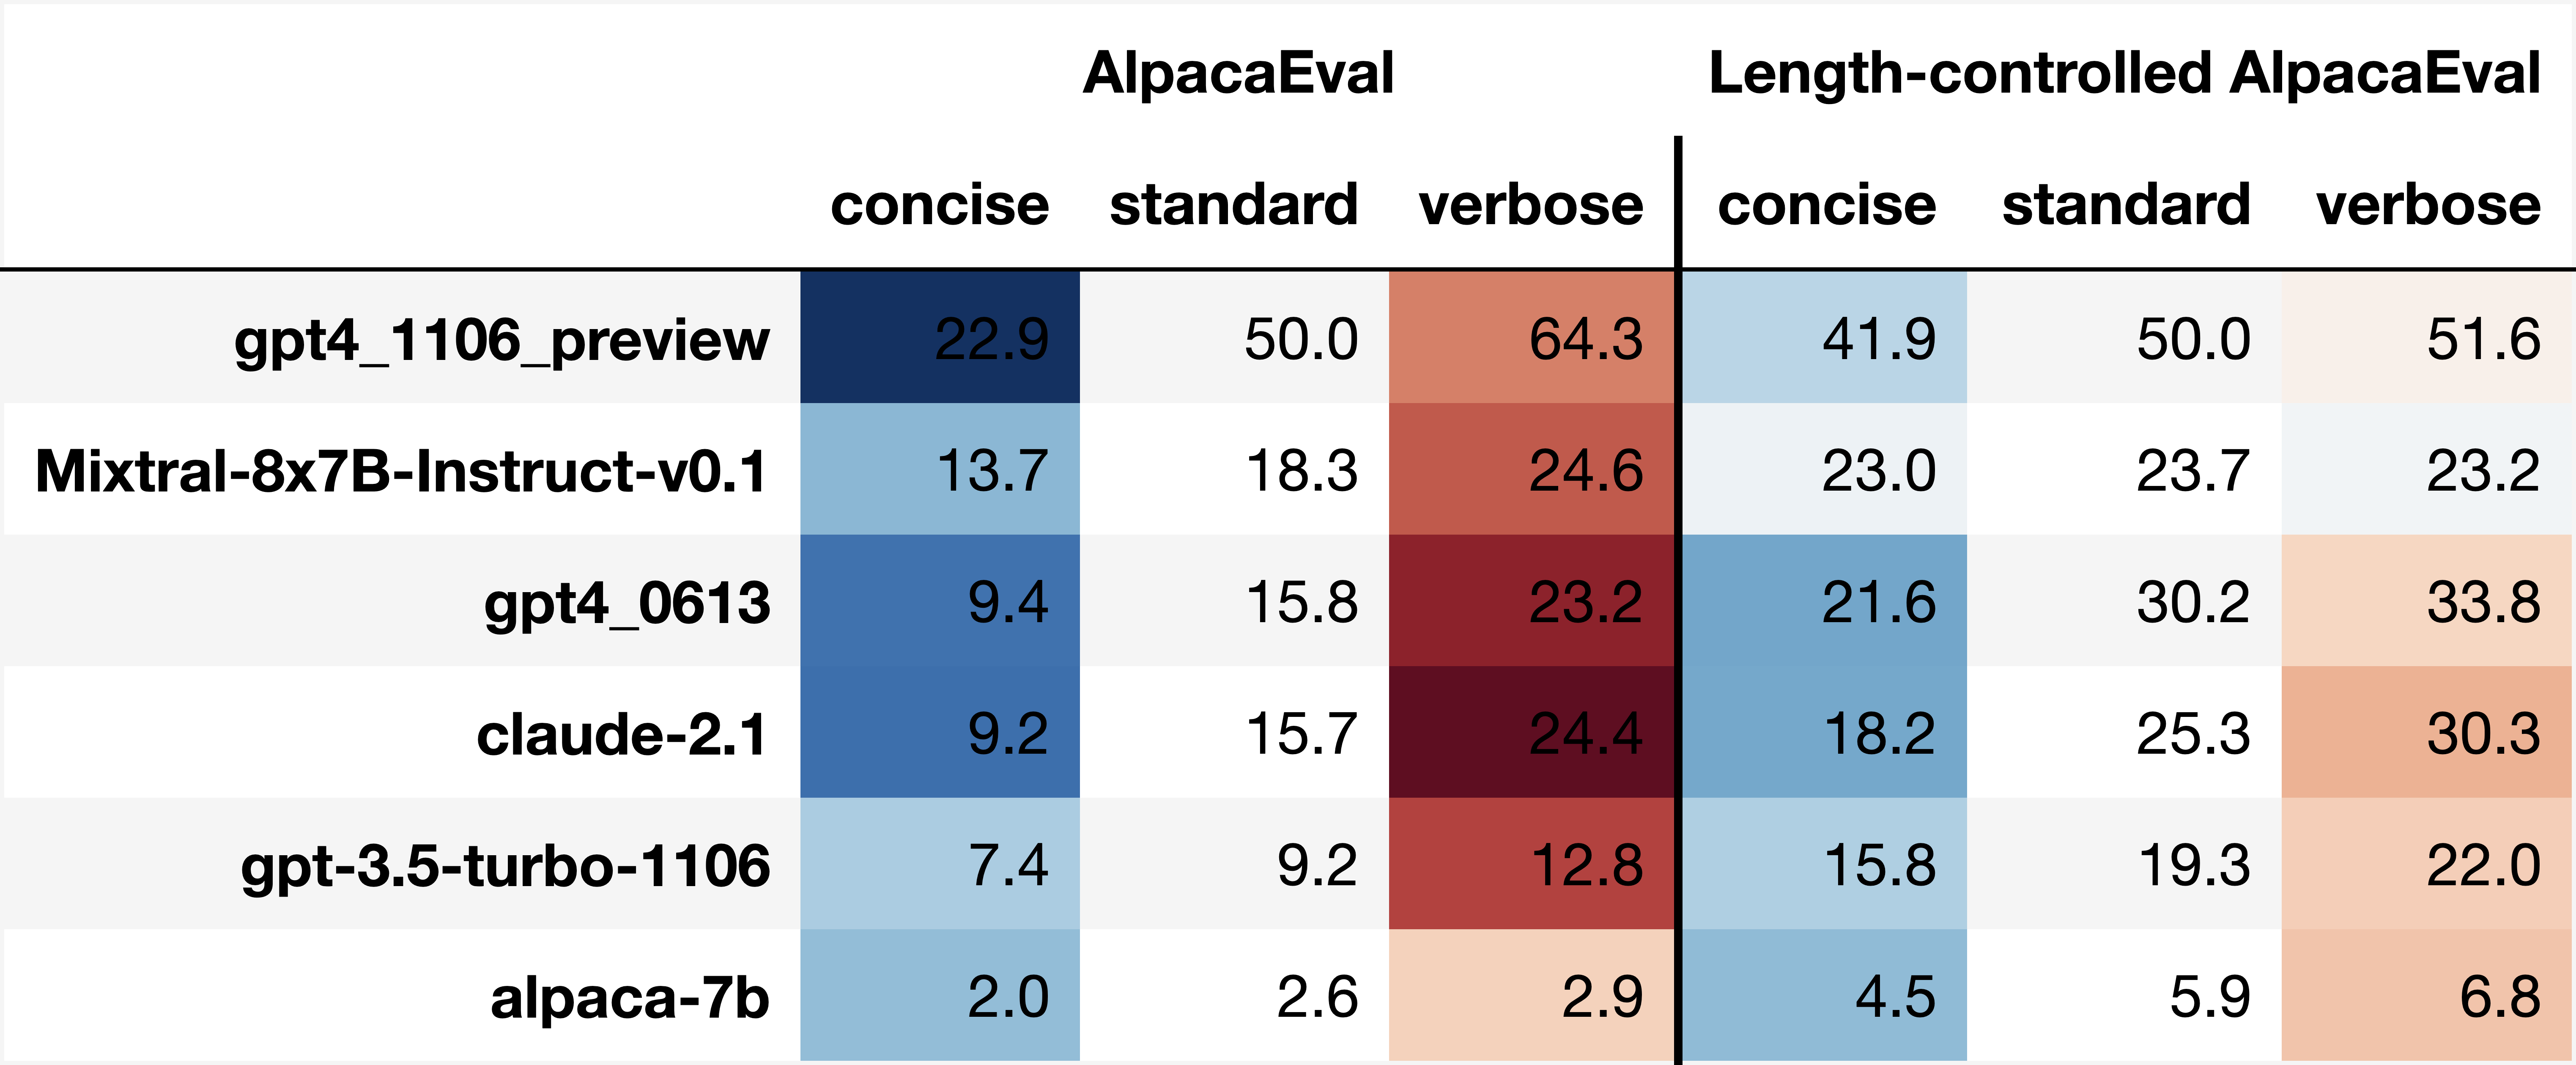 LC AlpacaEval decreases length gameability of the benchmark.